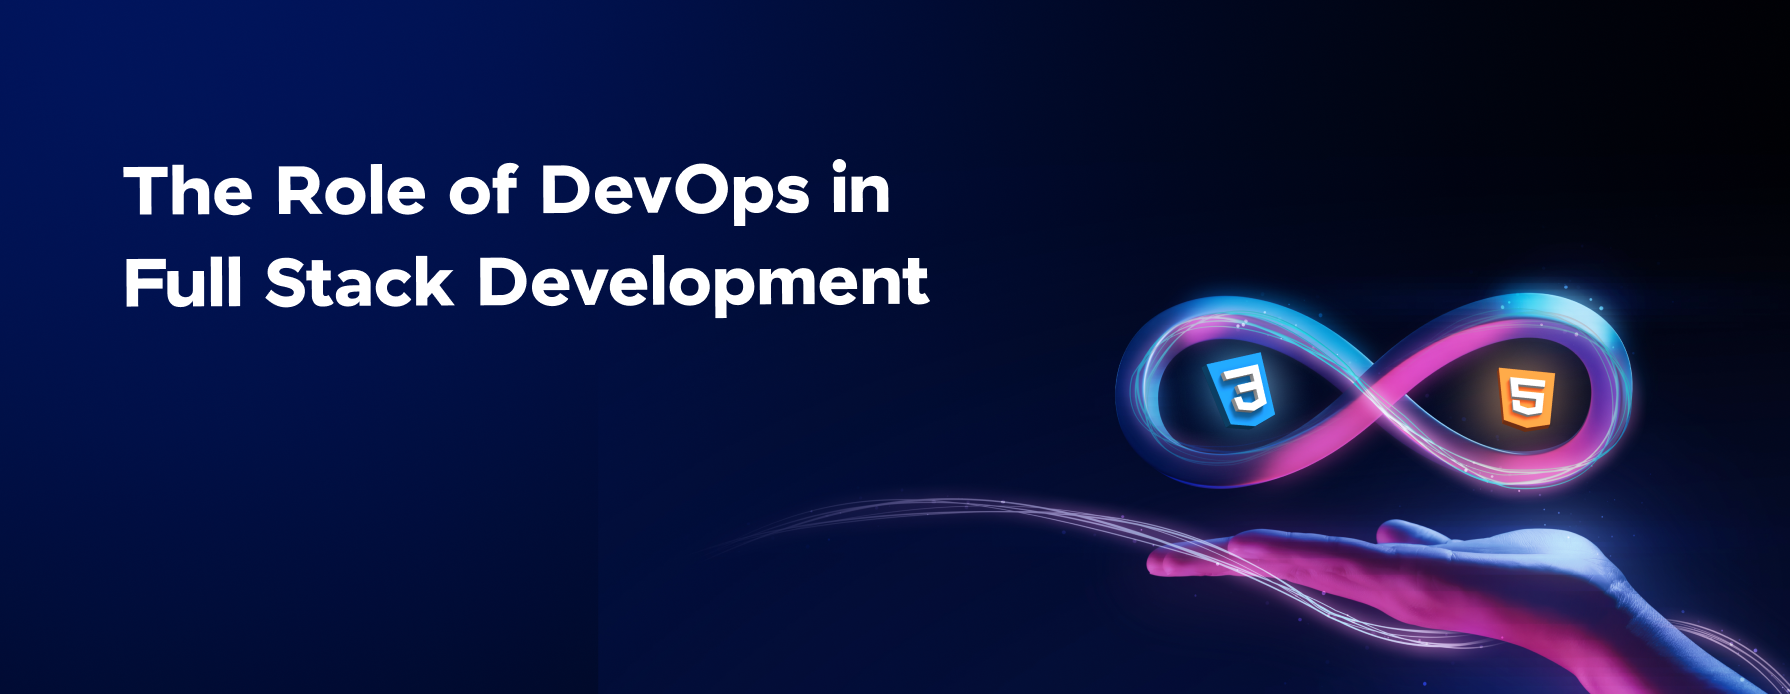 The Role of DevOps in Full Stack Development